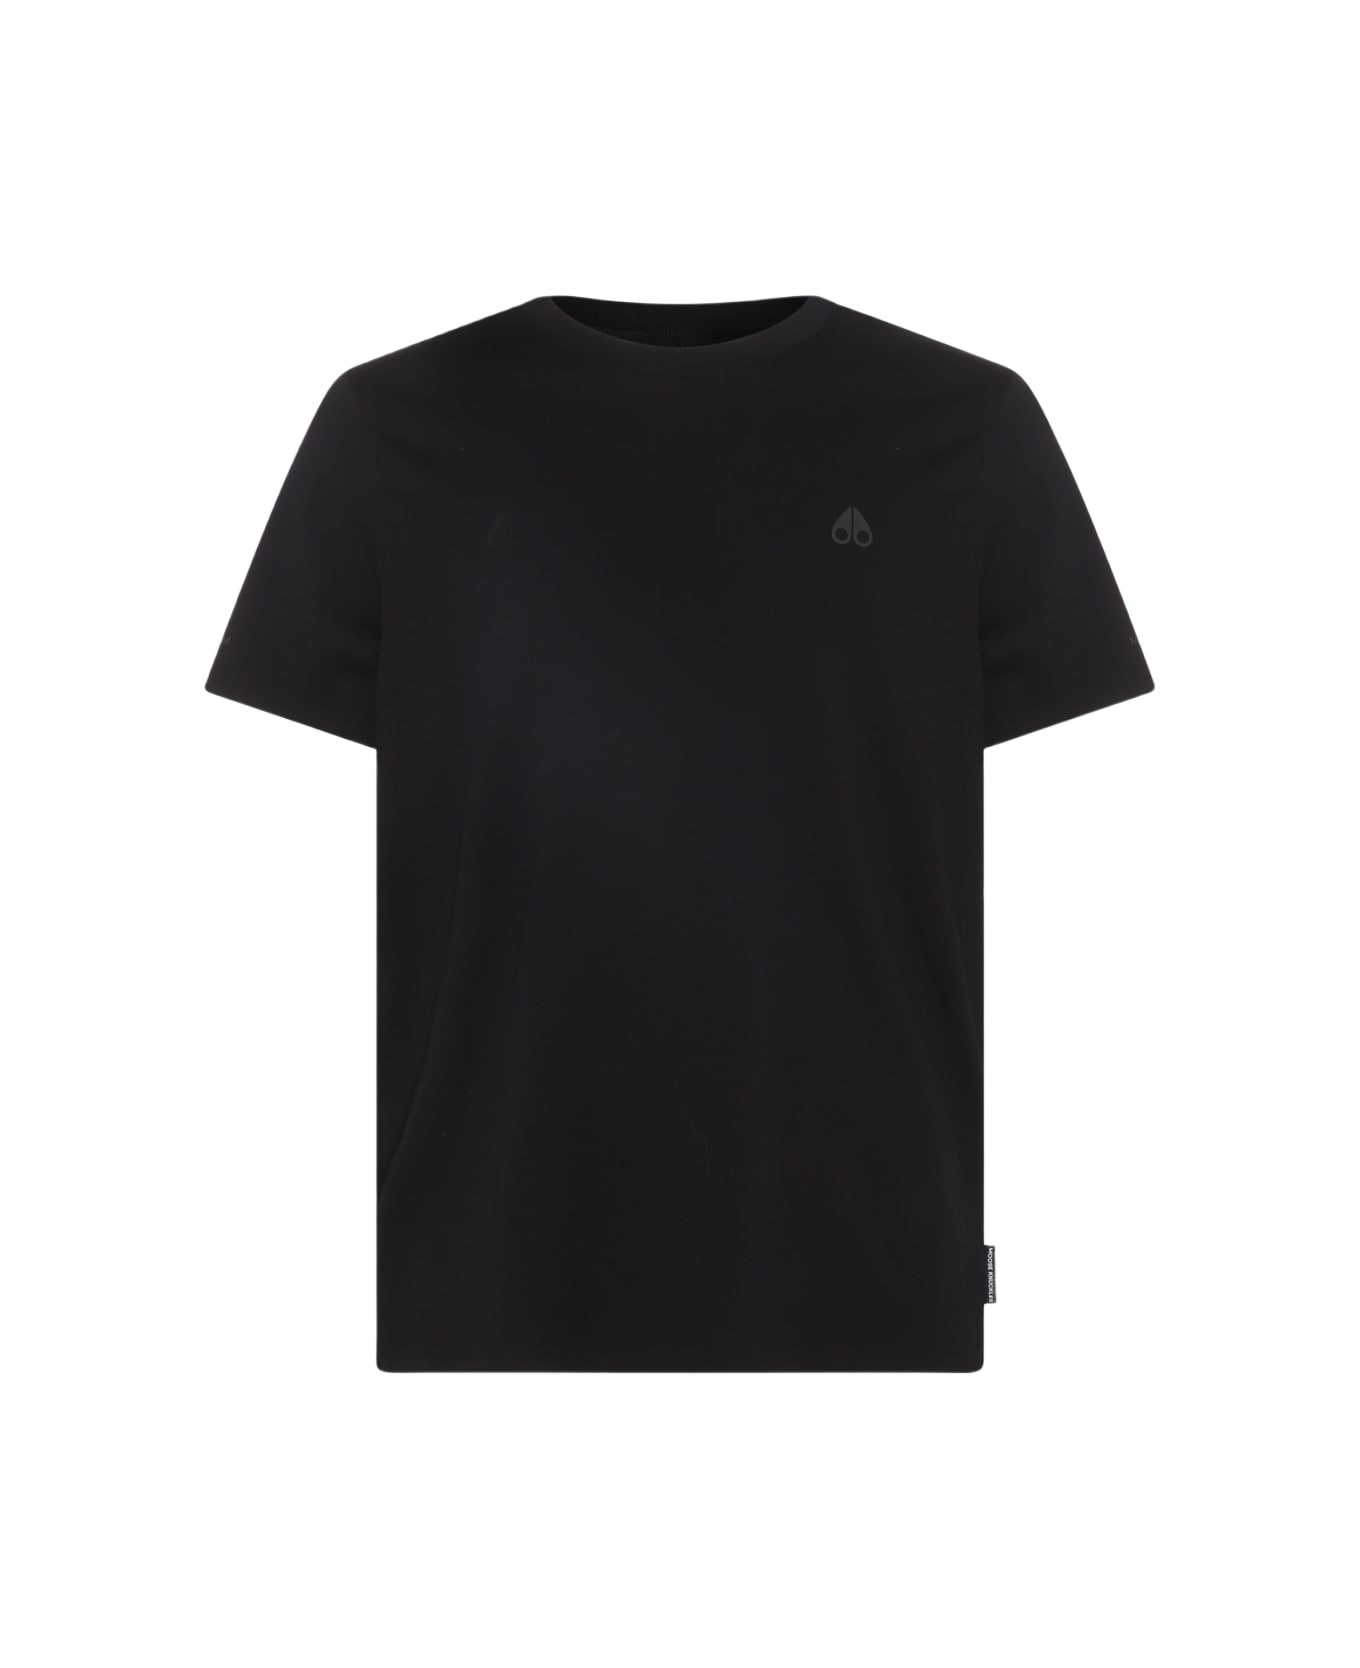 Moose Knuckles Black Cotton T-shirt - Black シャツ